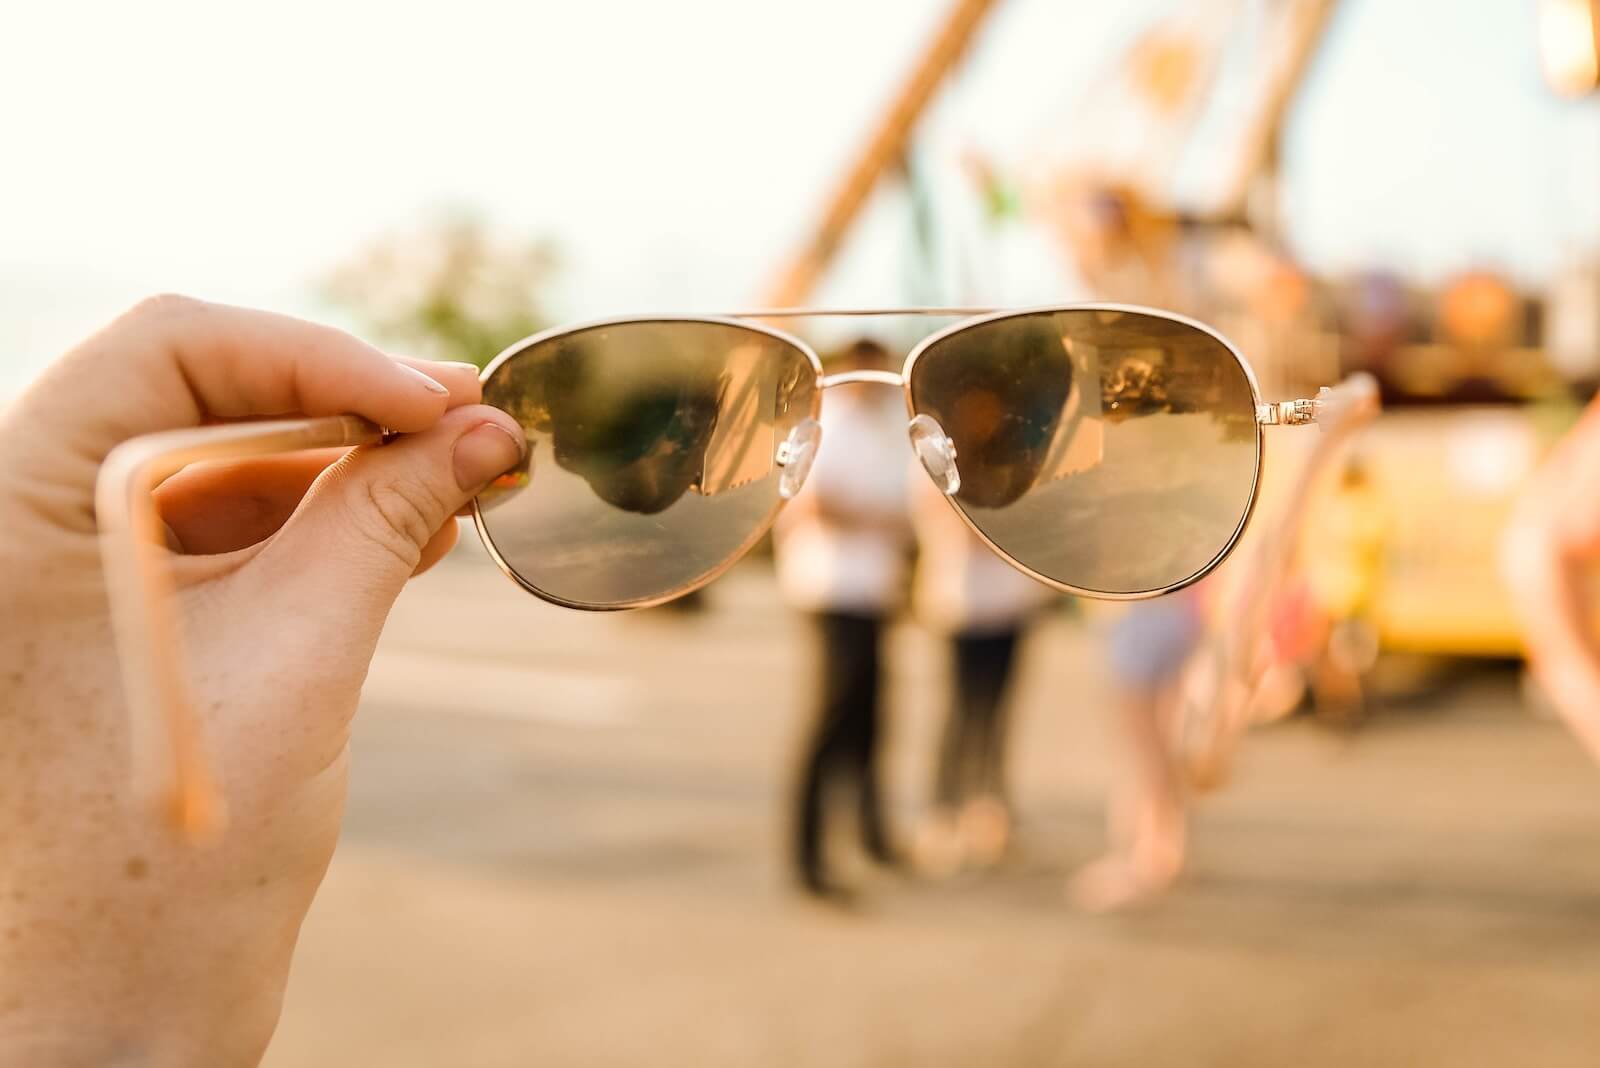 eyesight through sunglasses